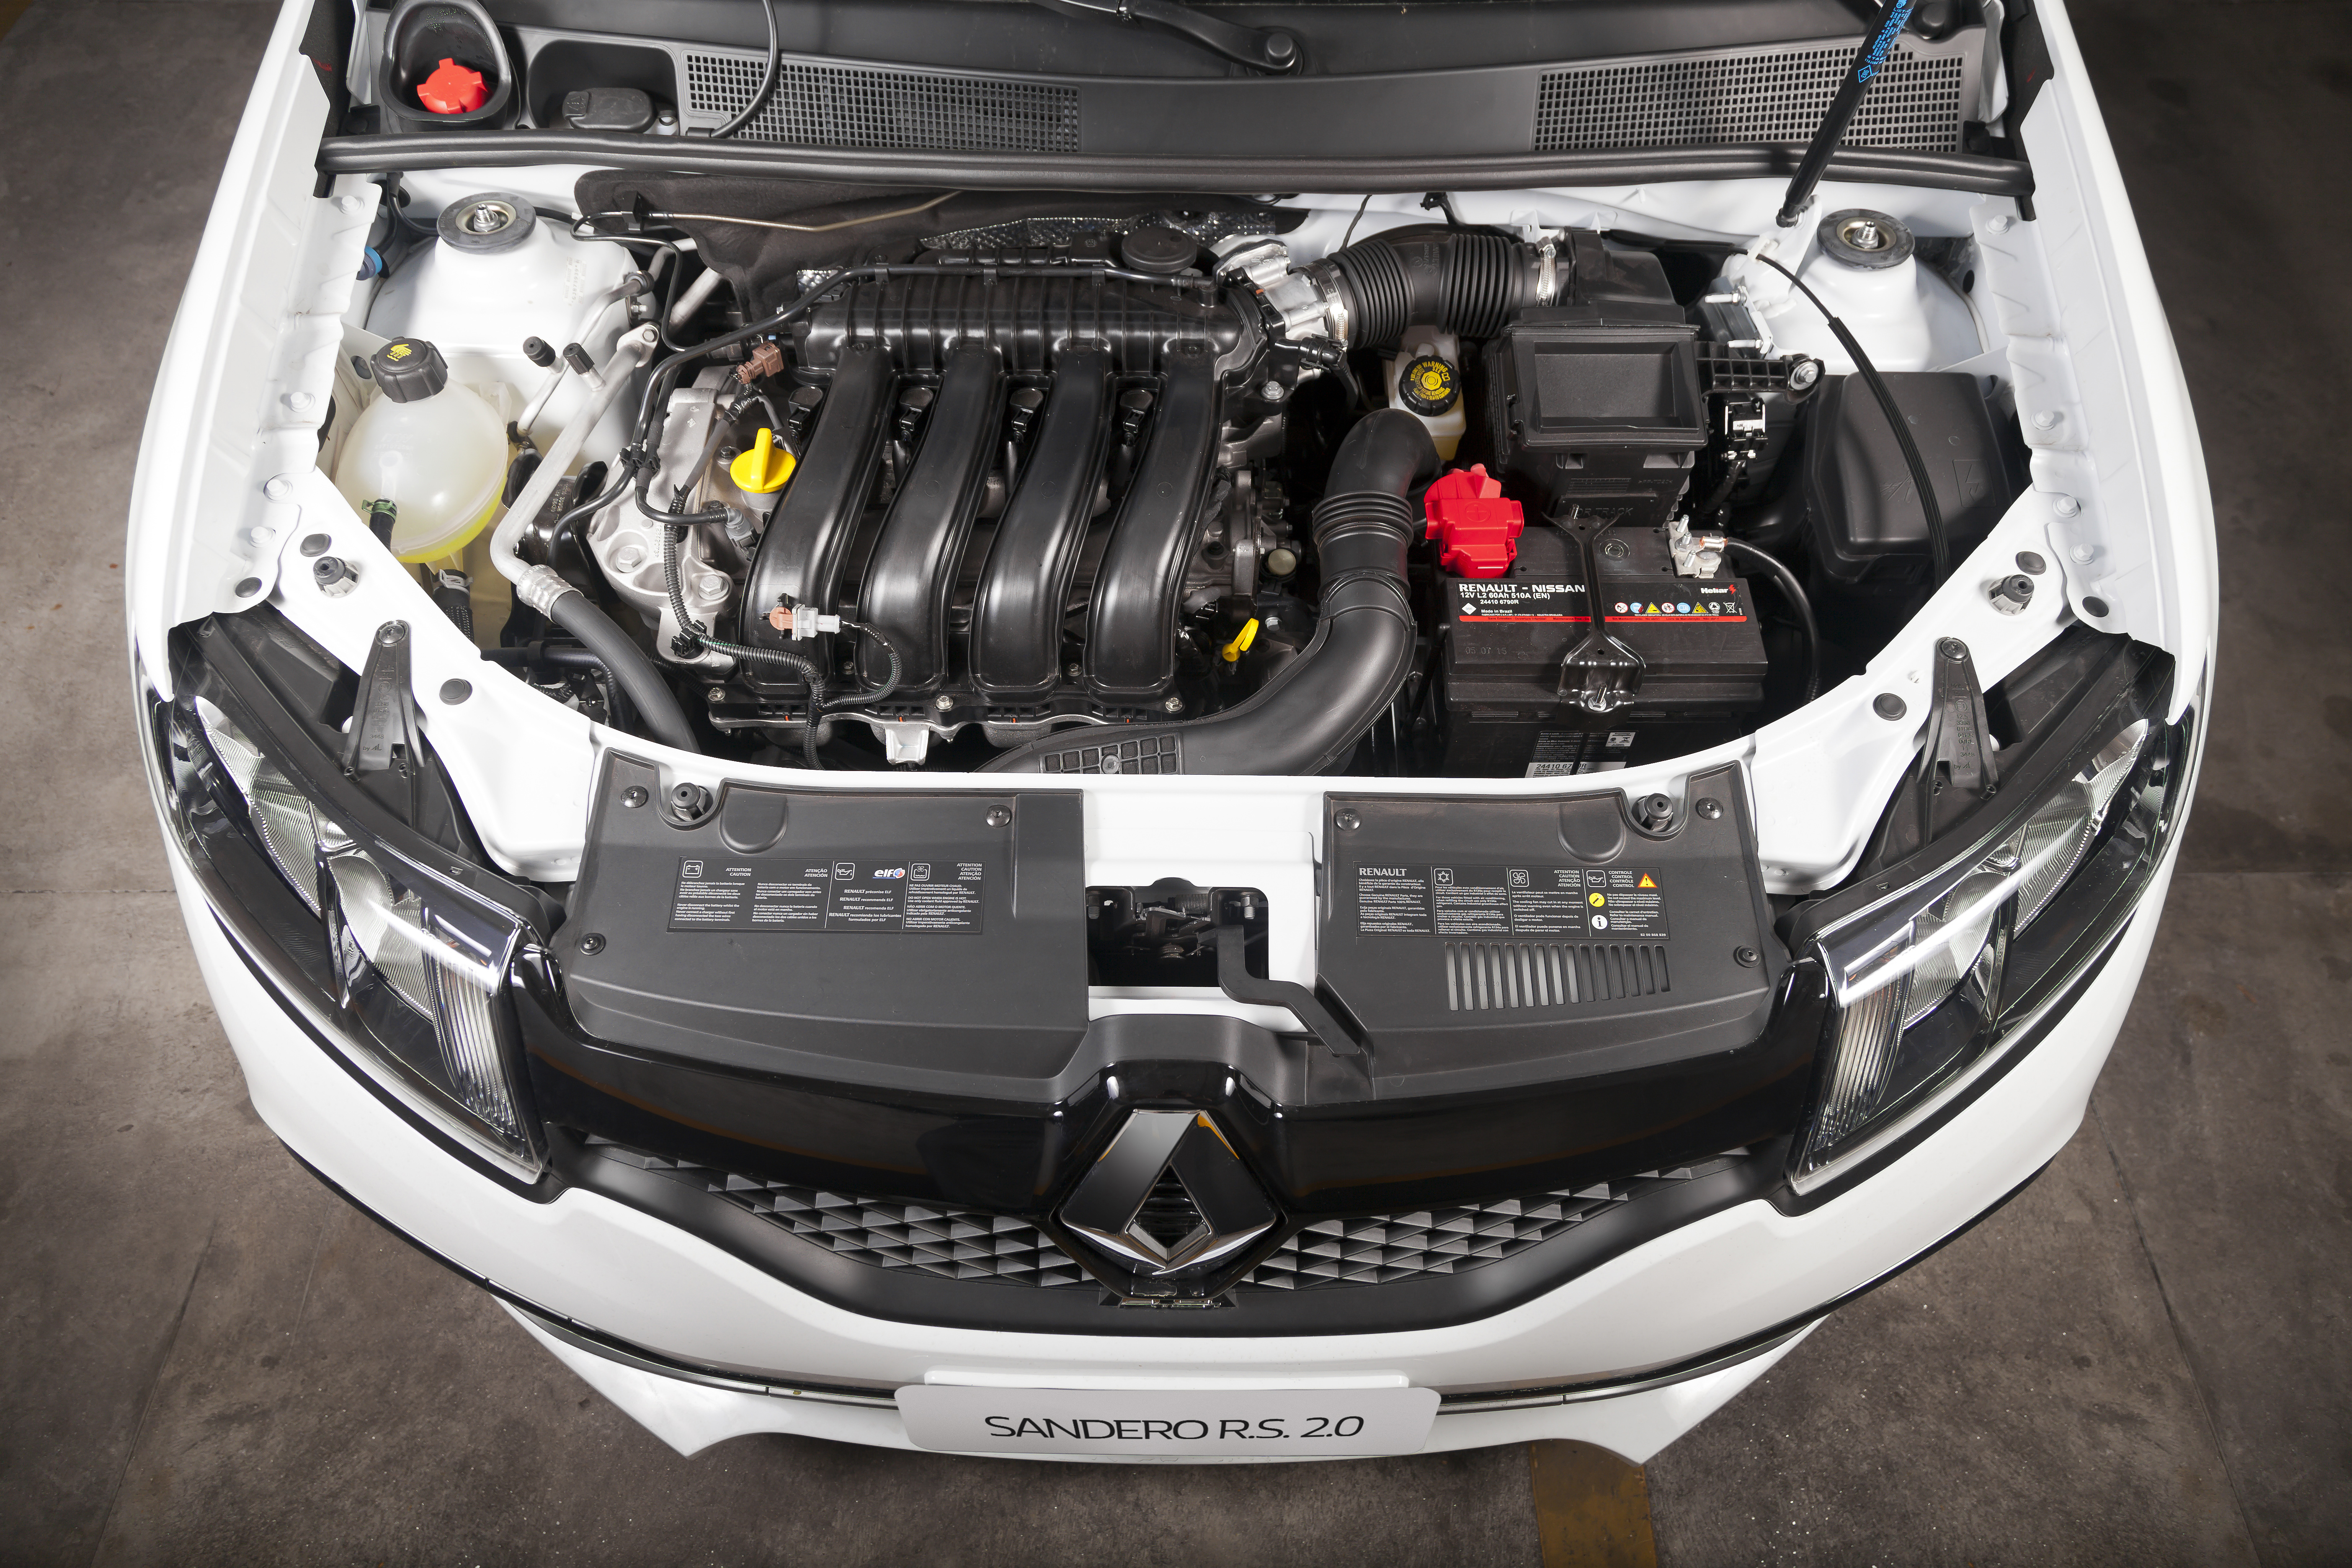 Sandero RS Motor